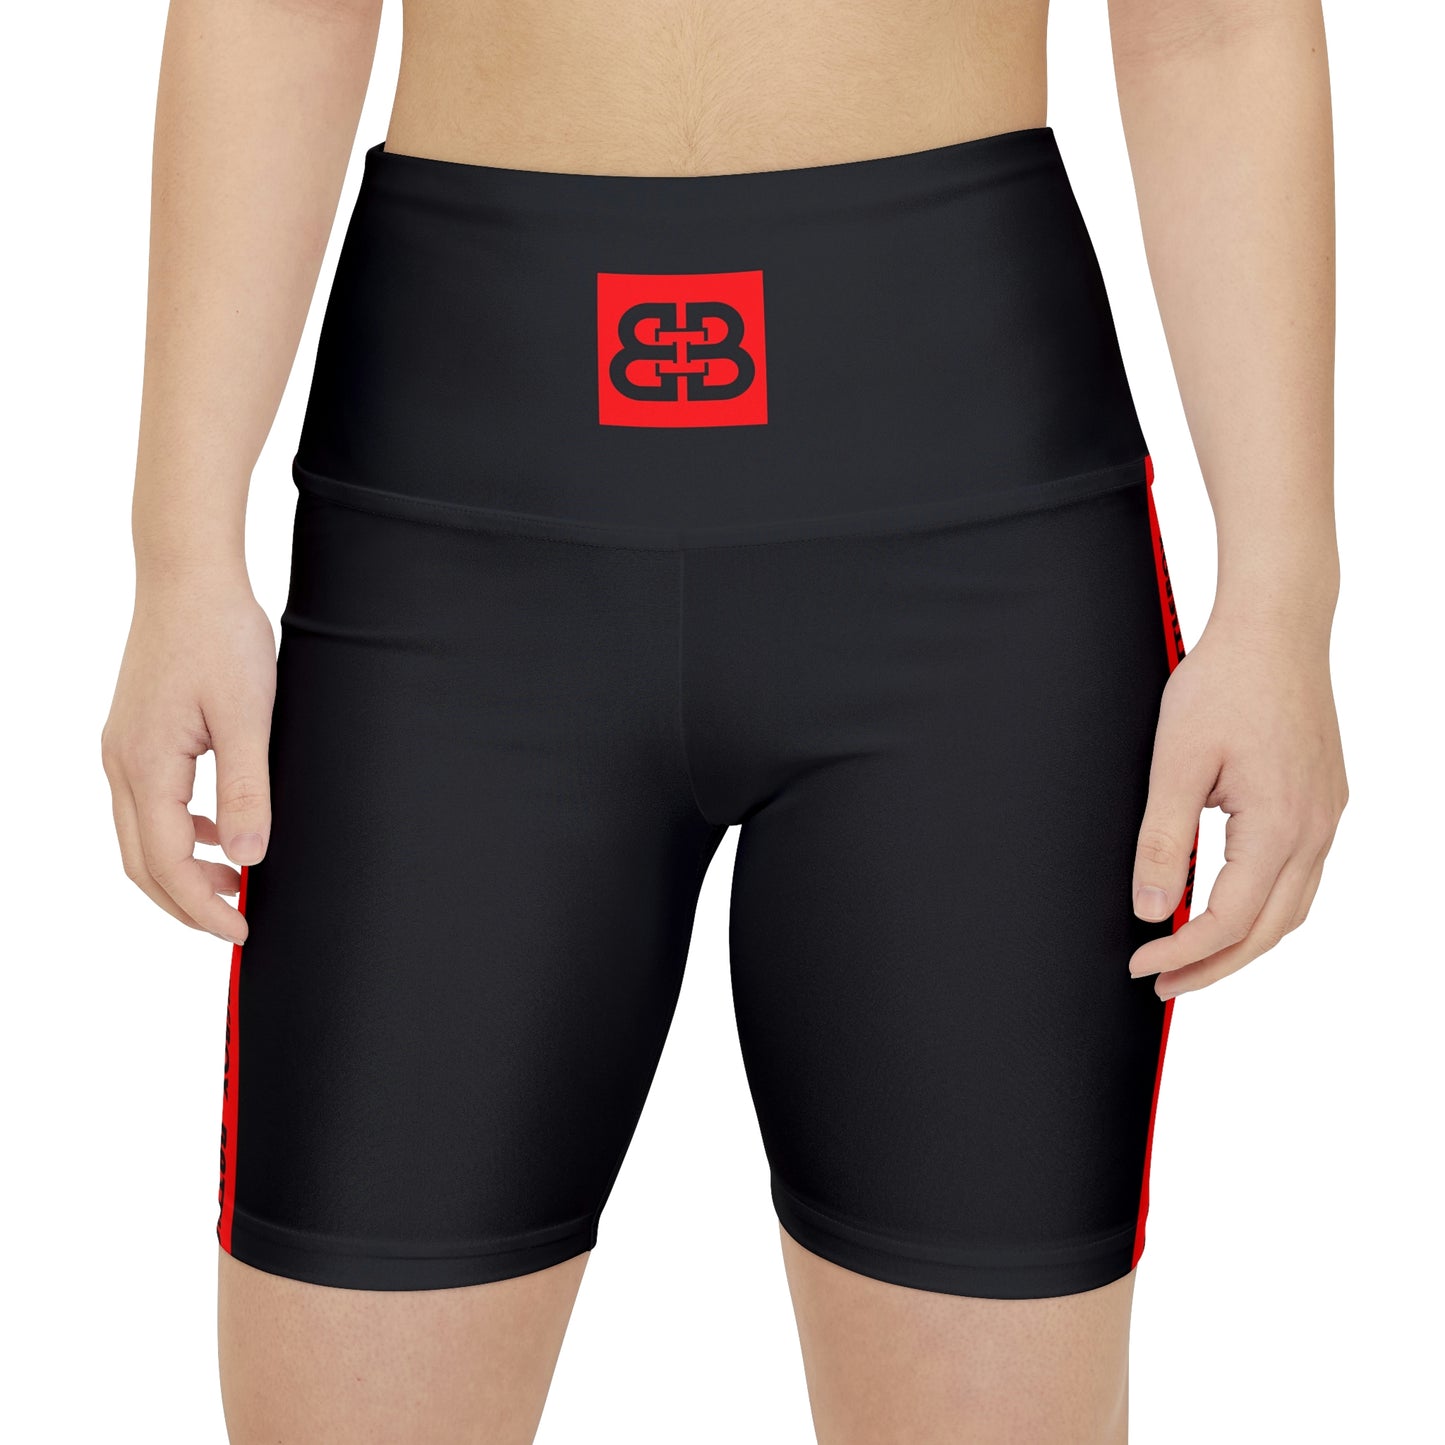 Battle Box Red/Black Women's Workout Shorts-T1